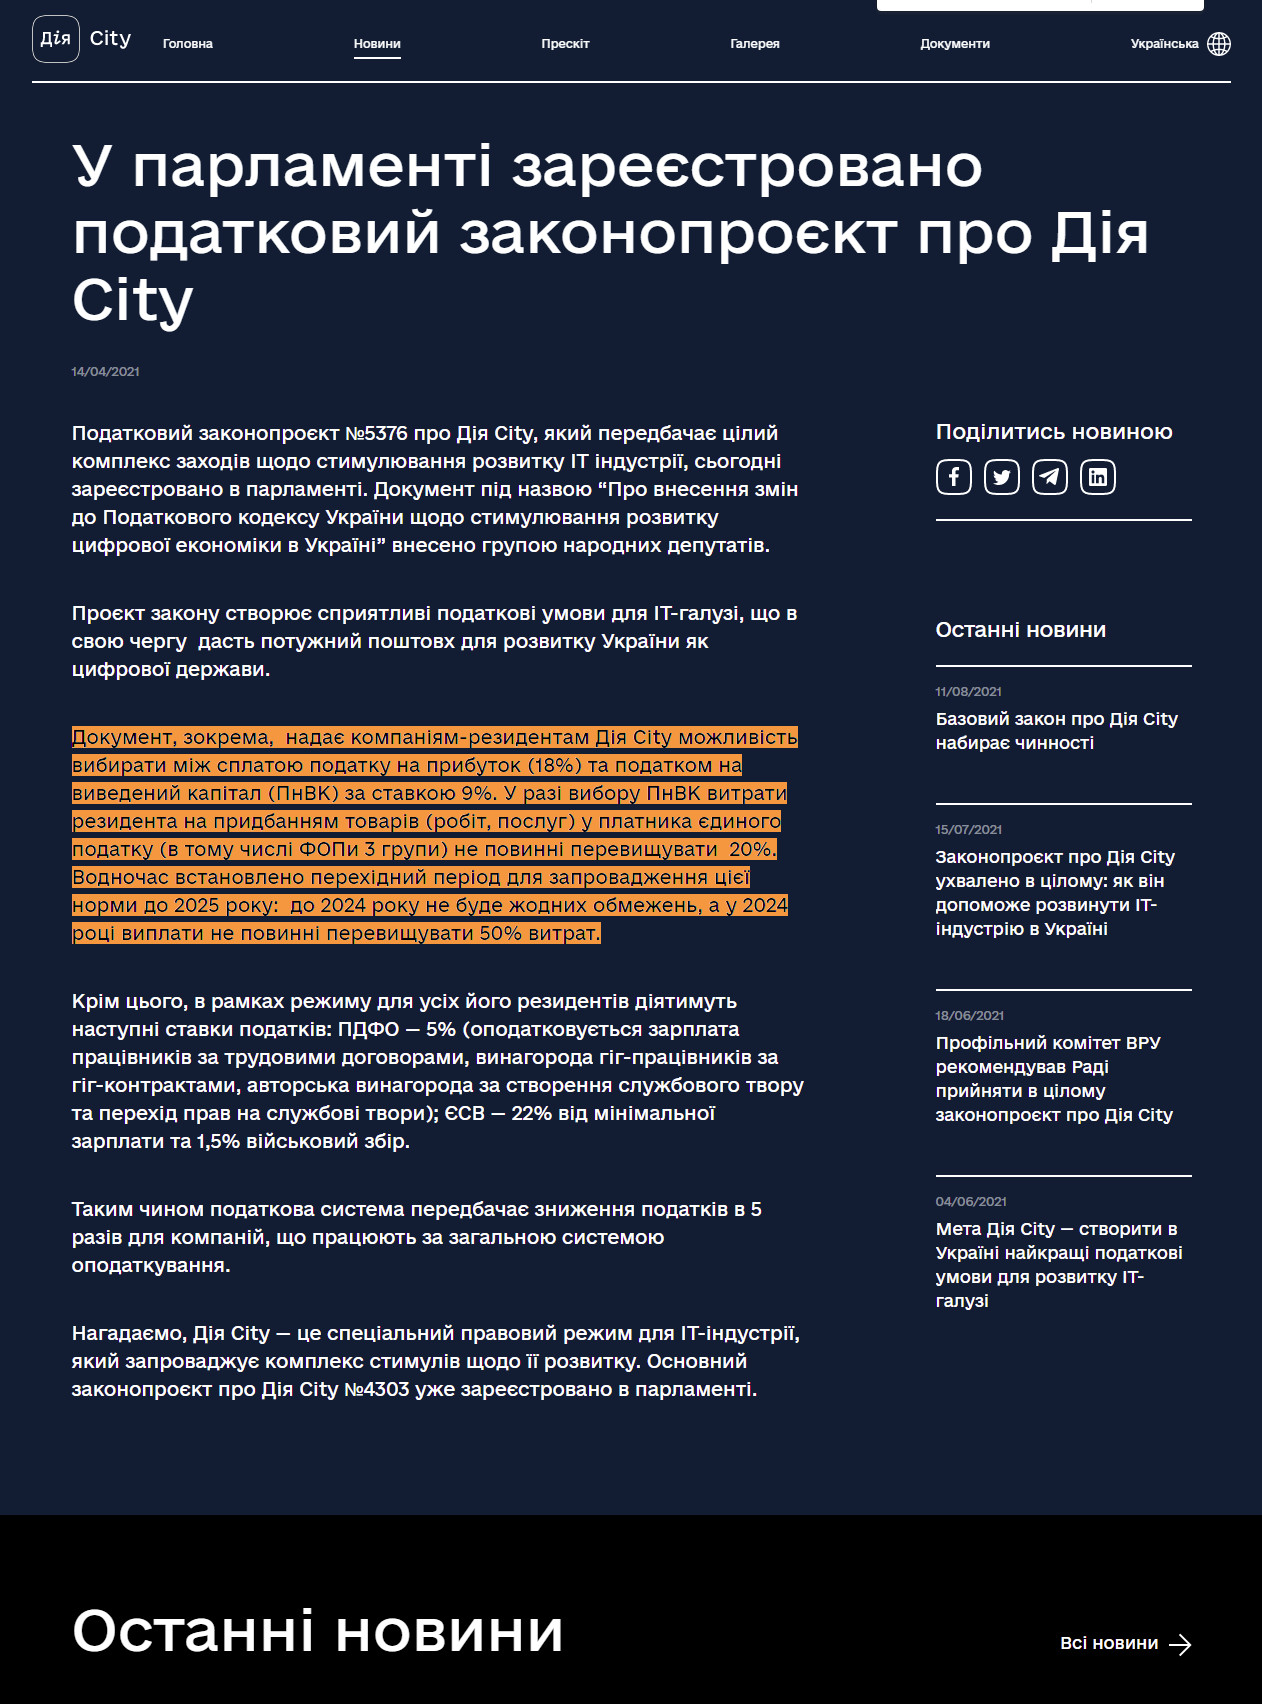 https://city.diia.gov.ua/news/u-parlamenti-zareestrovano-podatkoviy-zakonoproekt-pro-diya-city